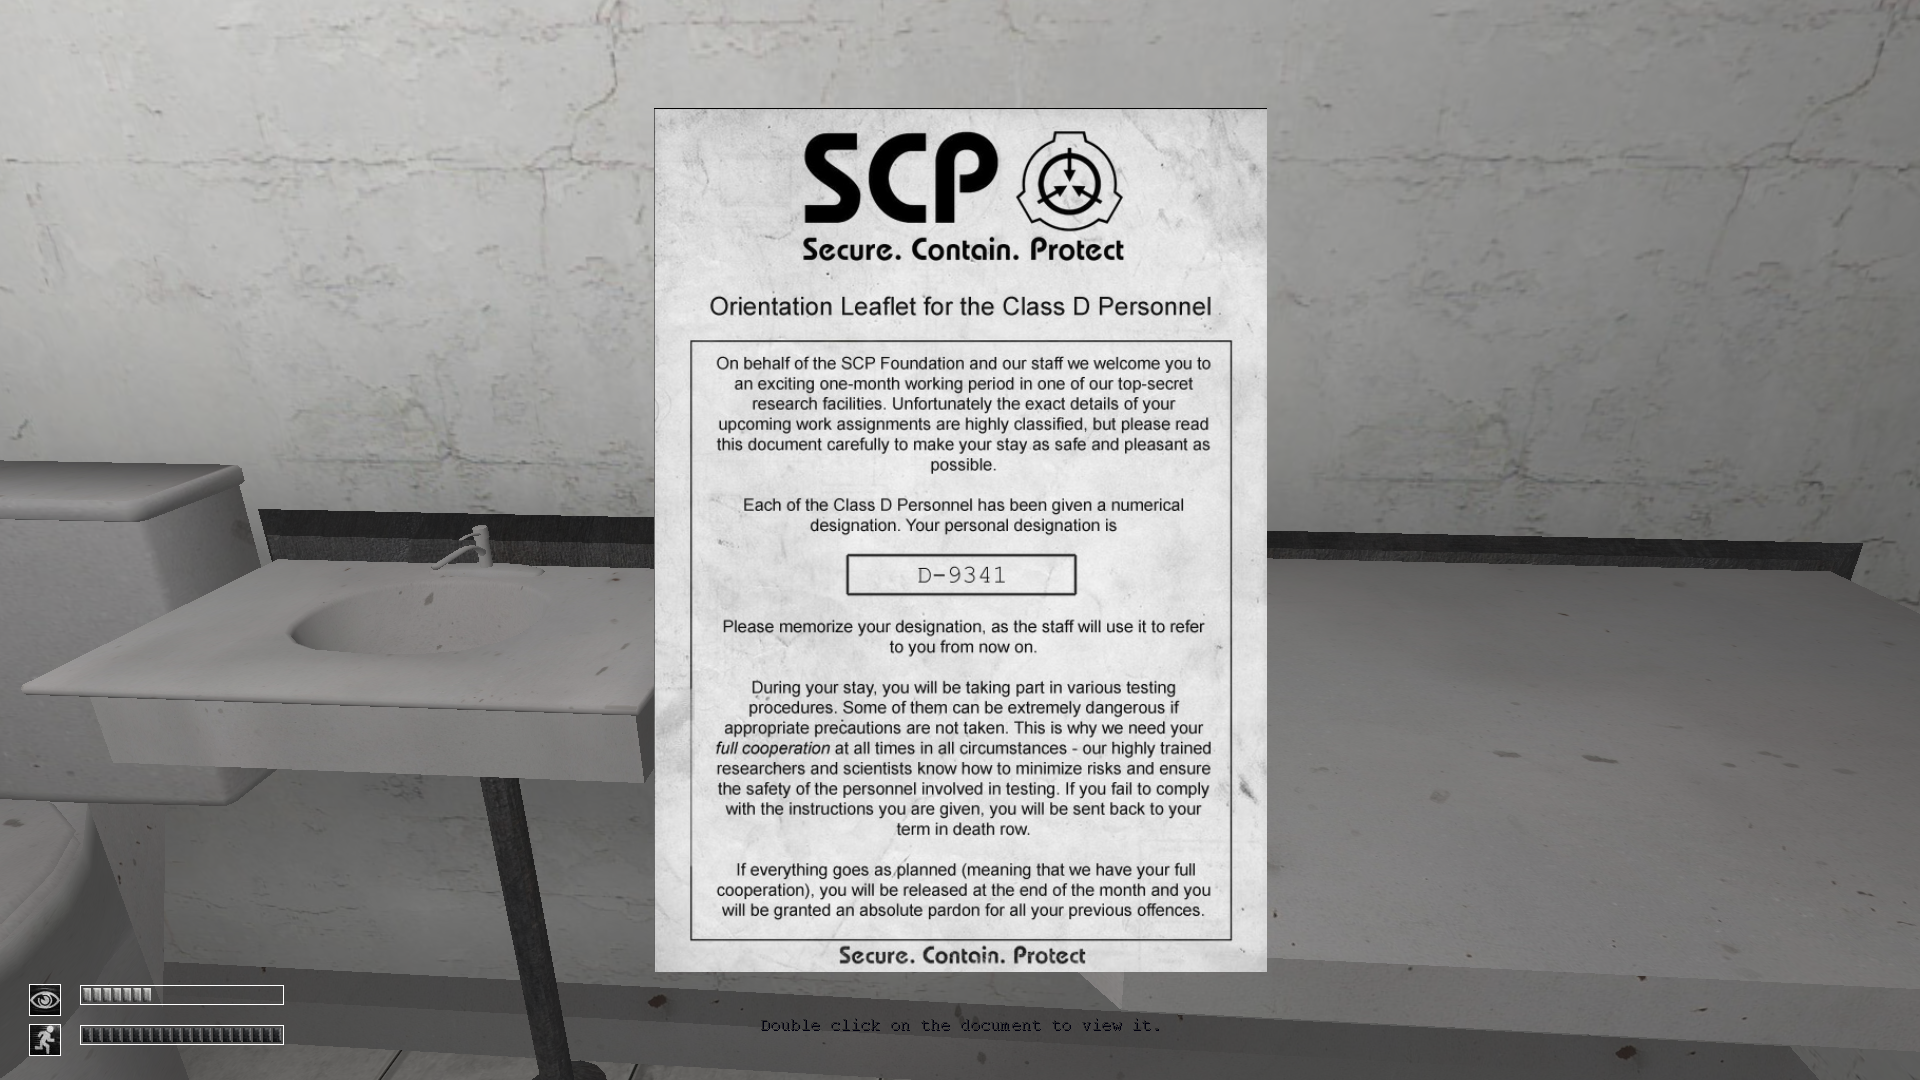 SCP: Containment Breach - Lutris